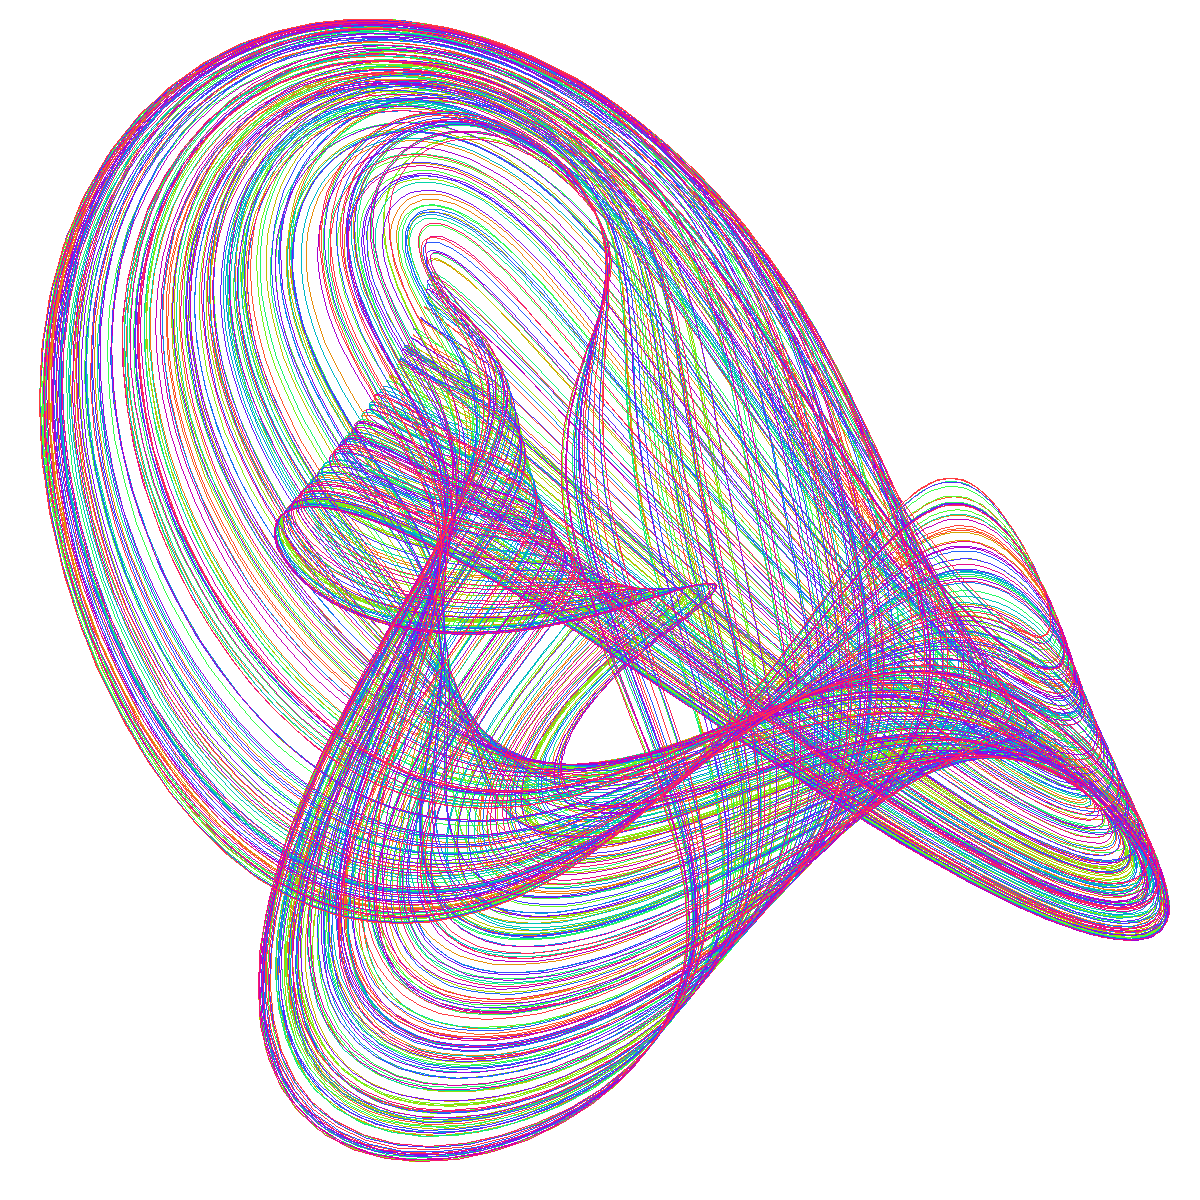 Halvorsen's Cyclically Symmetric Attractor